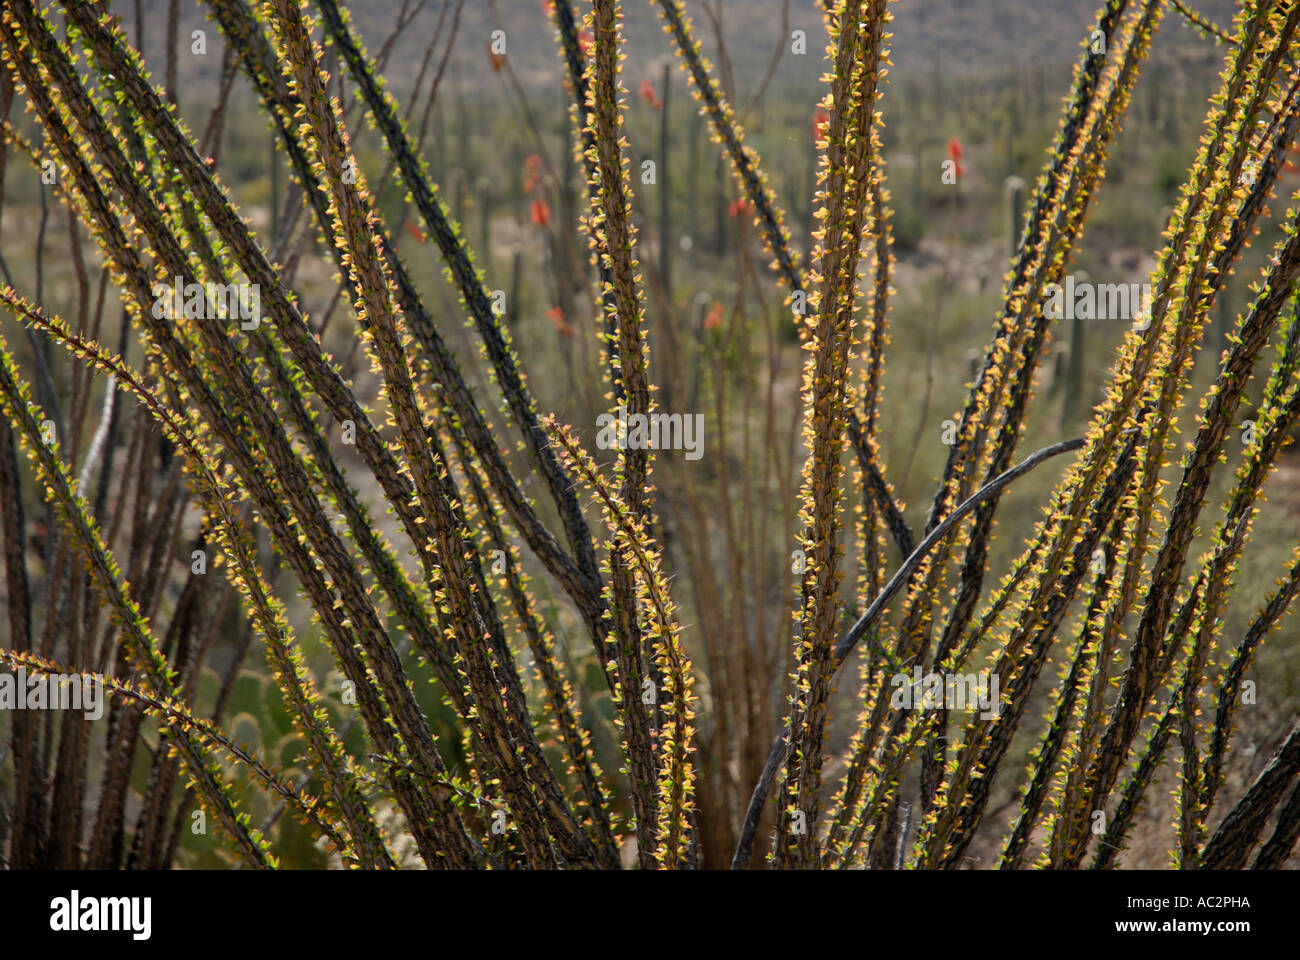 Ocotillo, Fonquieria splendens, stems backlit with red ocotillo flowers, Sonoran Desert, southwest USA Stock Photo